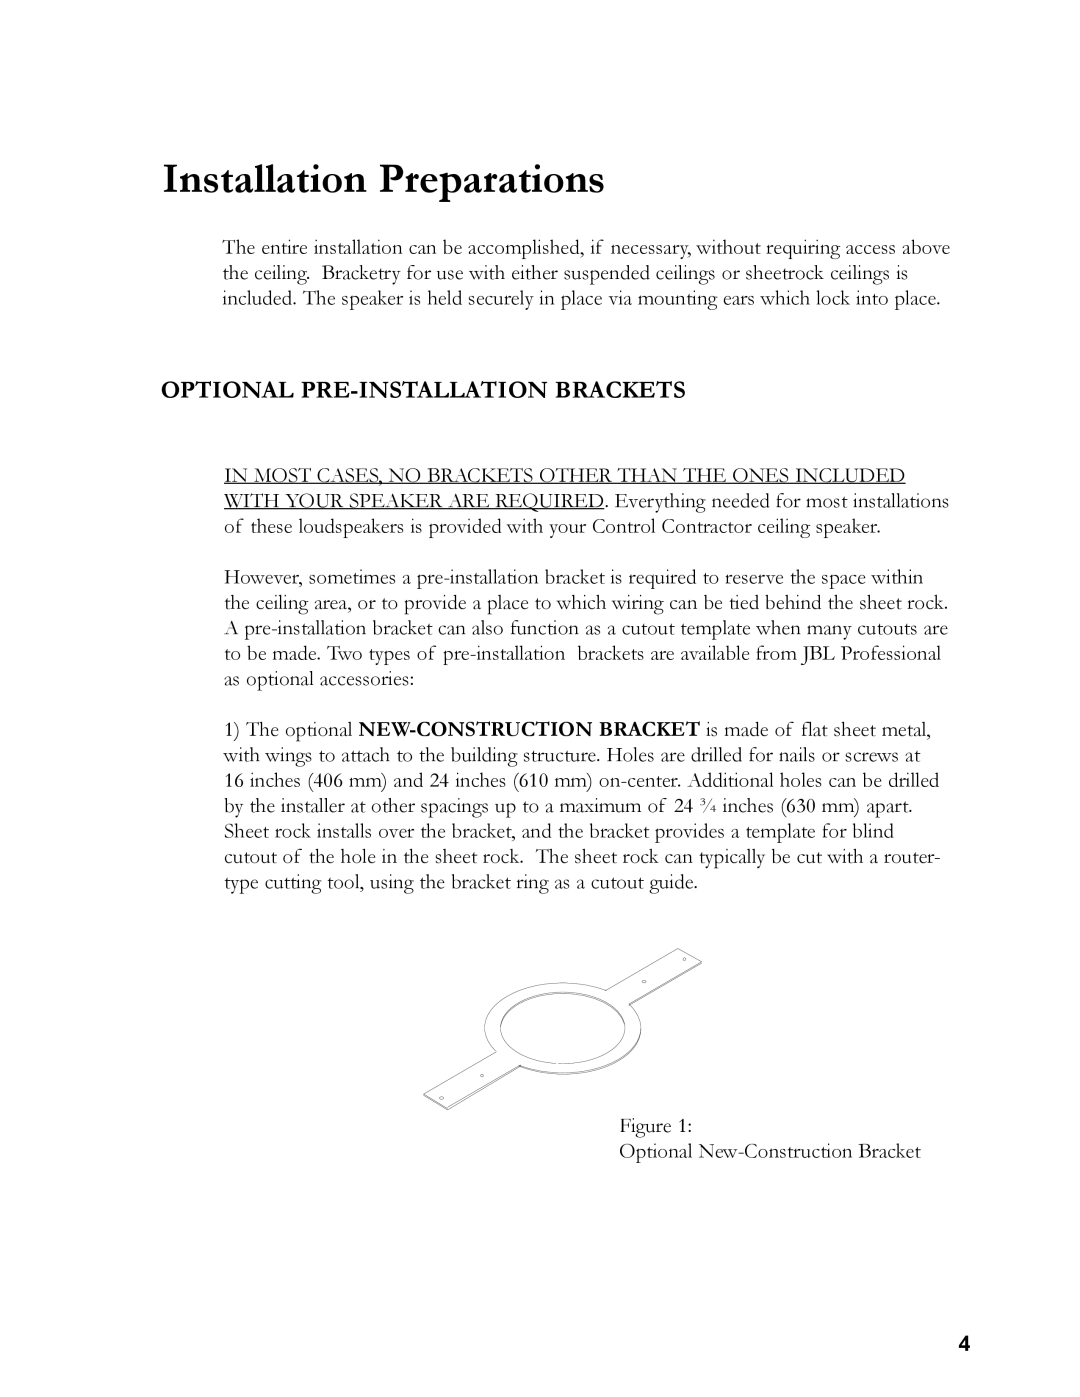 JBL 24C/CT owner manual Installation Preparations, Optional Pre-Installationbrackets 